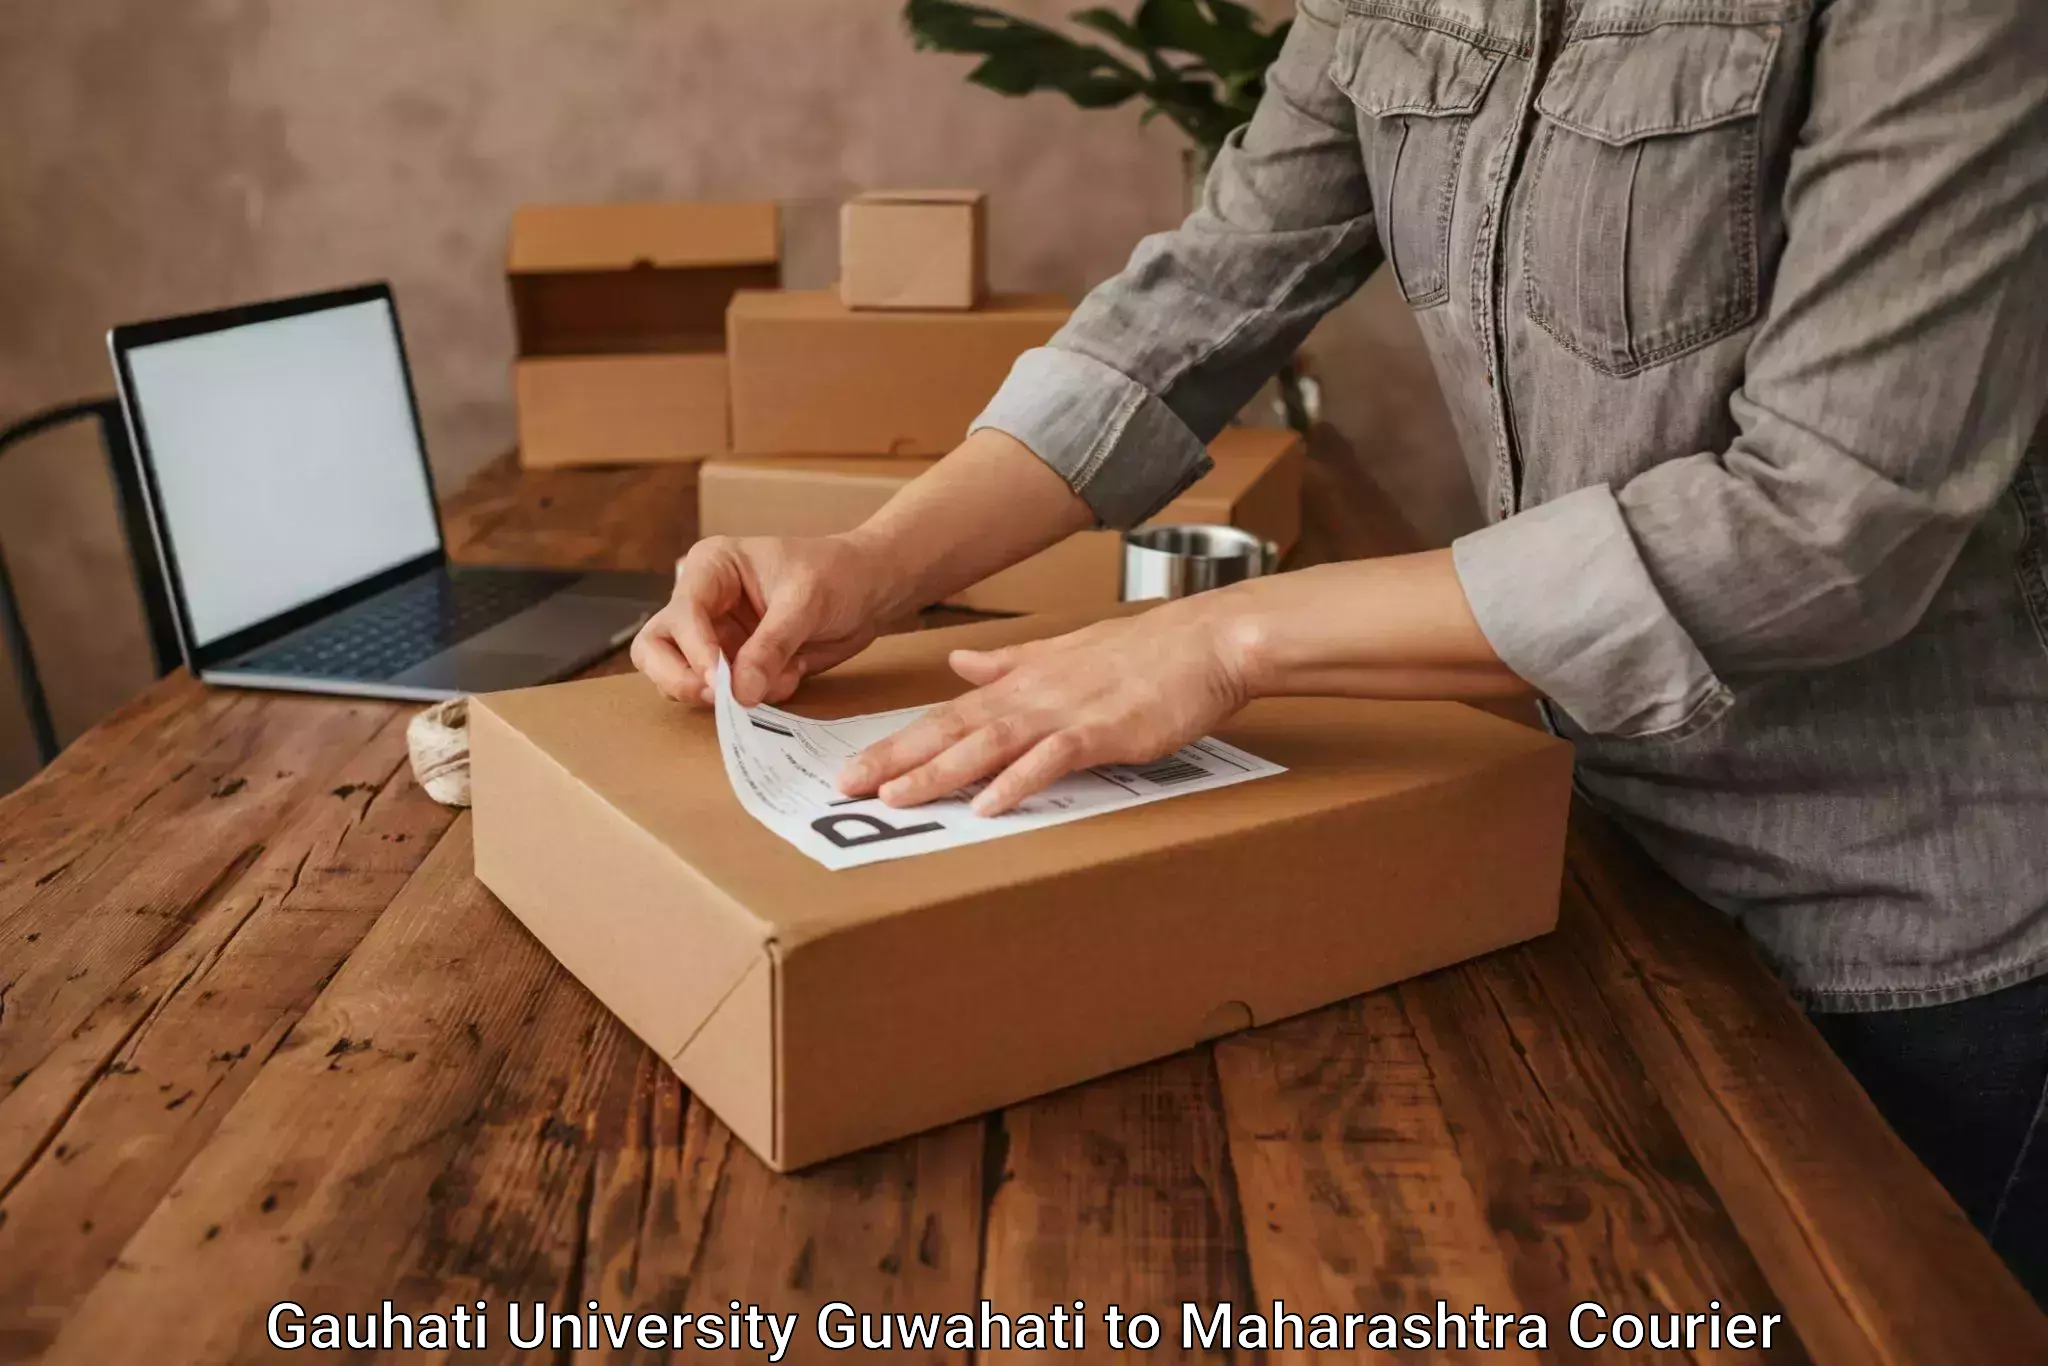 Rural area delivery Gauhati University Guwahati to Tata Institute of Social Sciences Mumbai